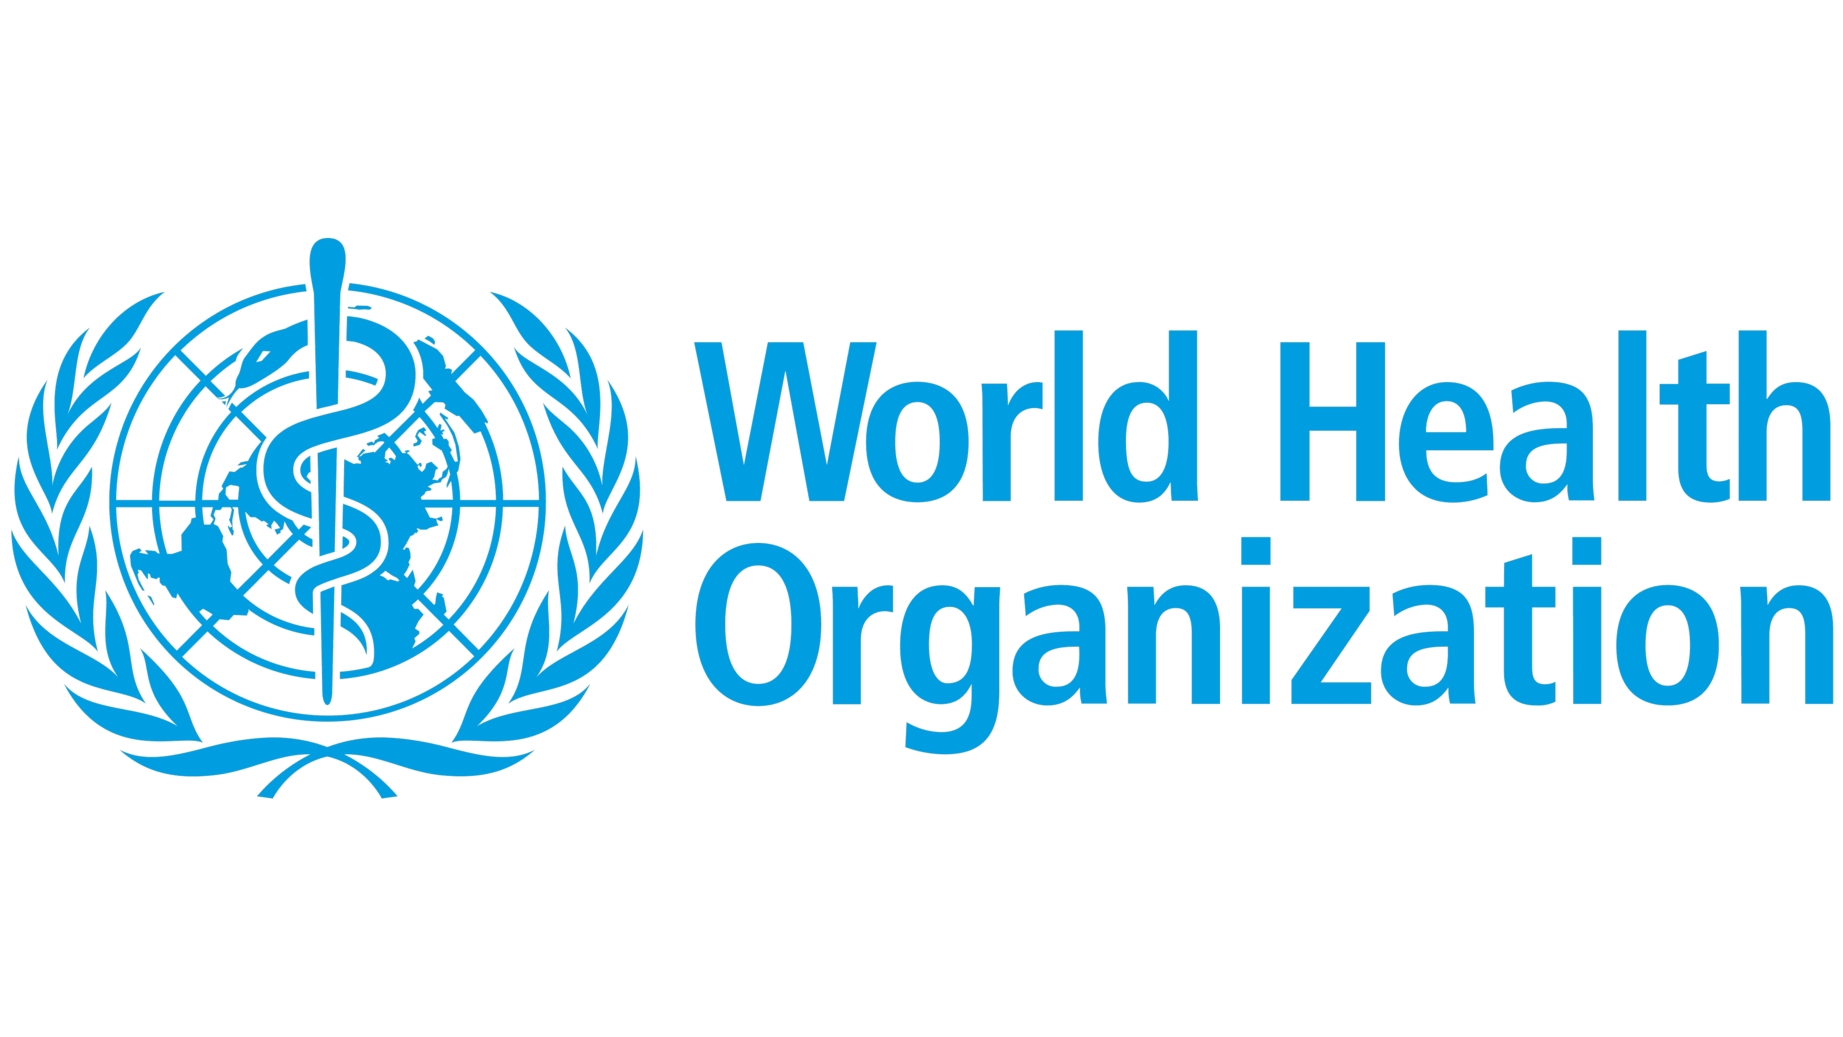 World health organization who sign